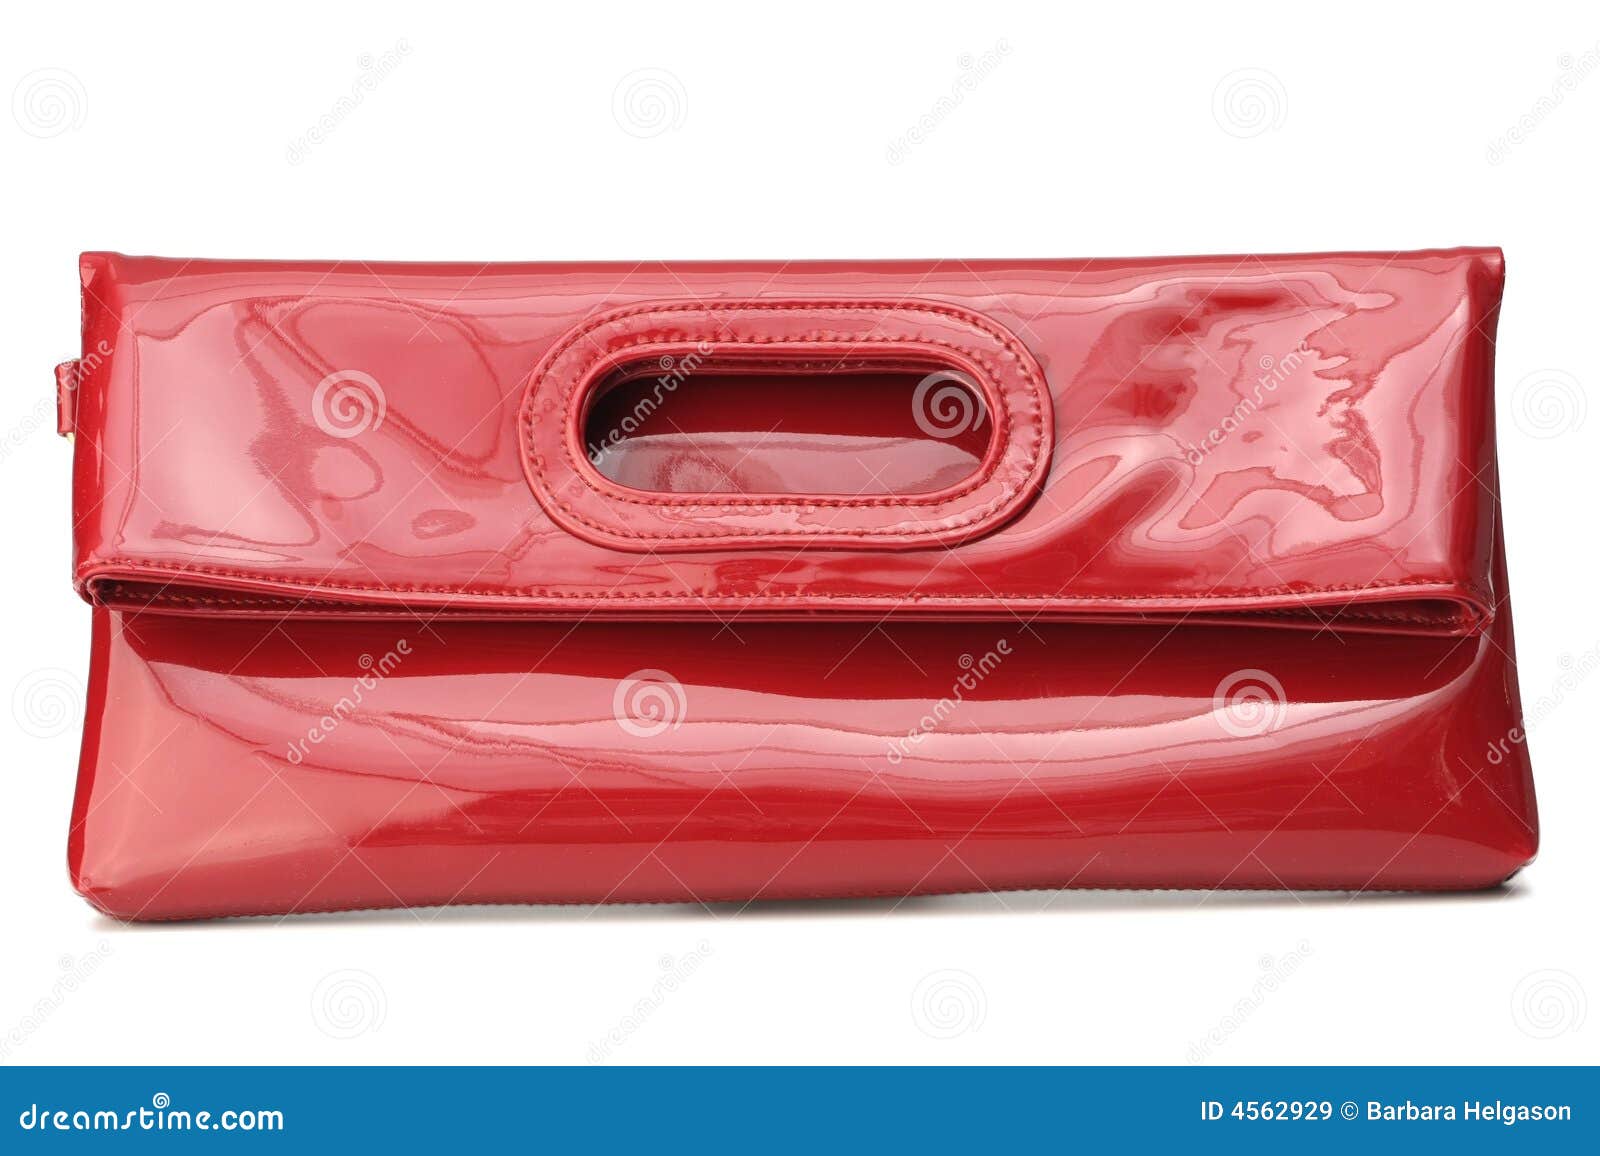 Buy CARPISA Red Leather Clutch Online At Best Price @ Tata CLiQ